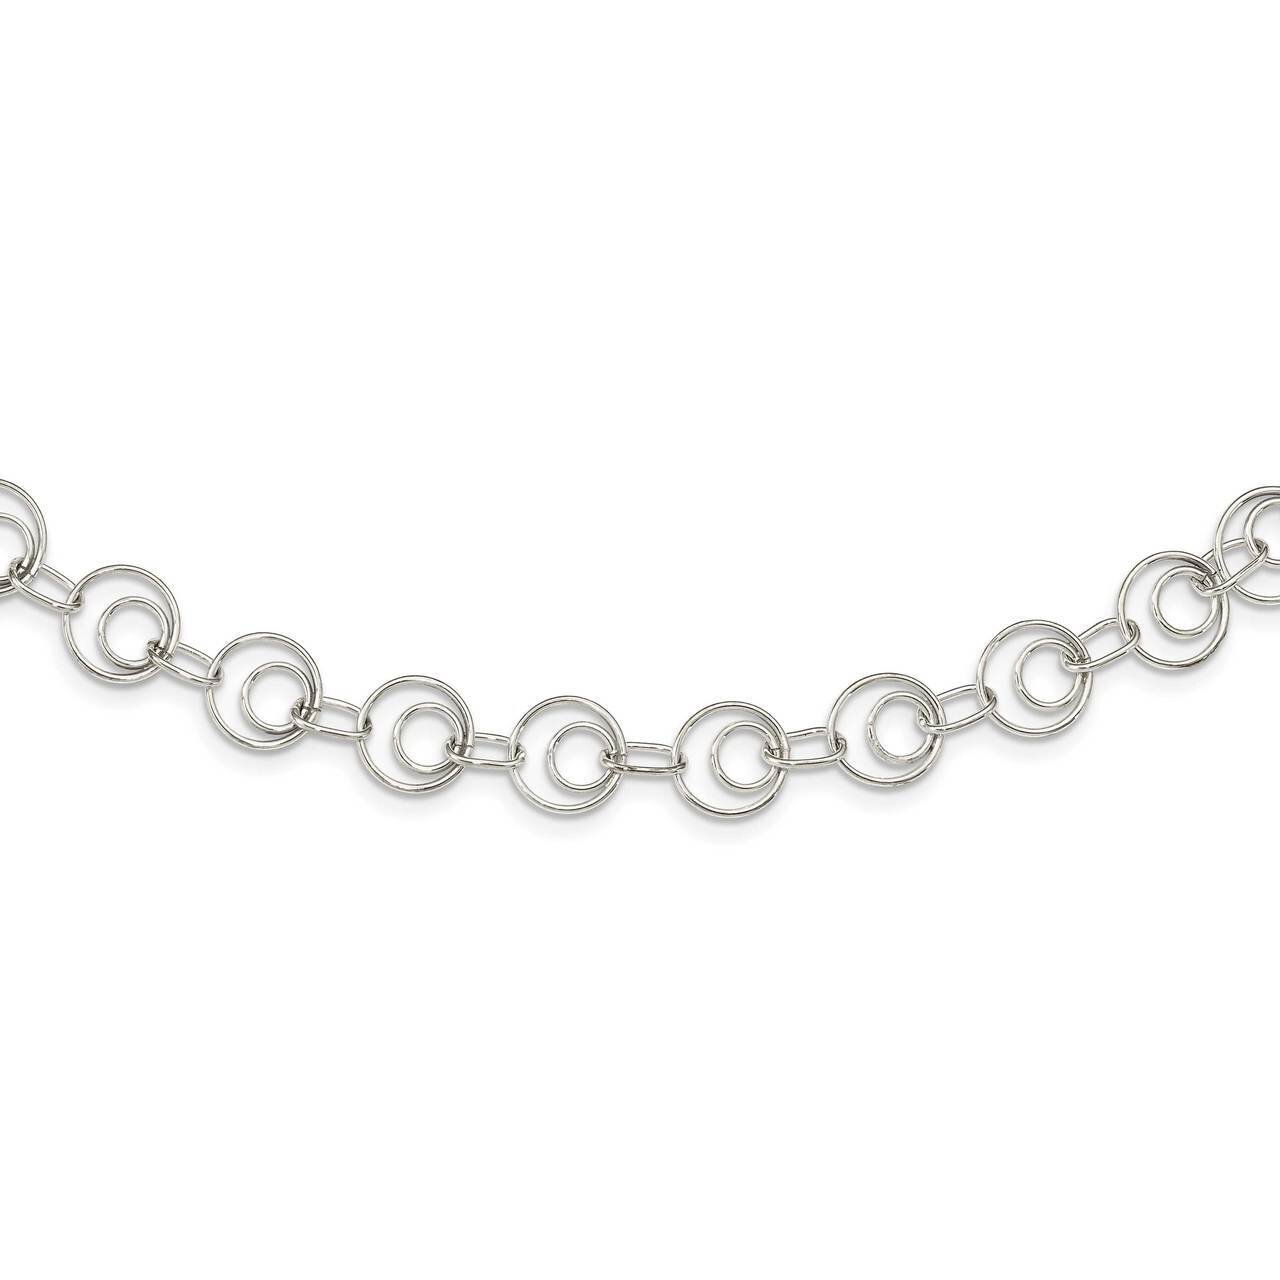 Linked Necklace Sterling Silver Polished QG5360-18